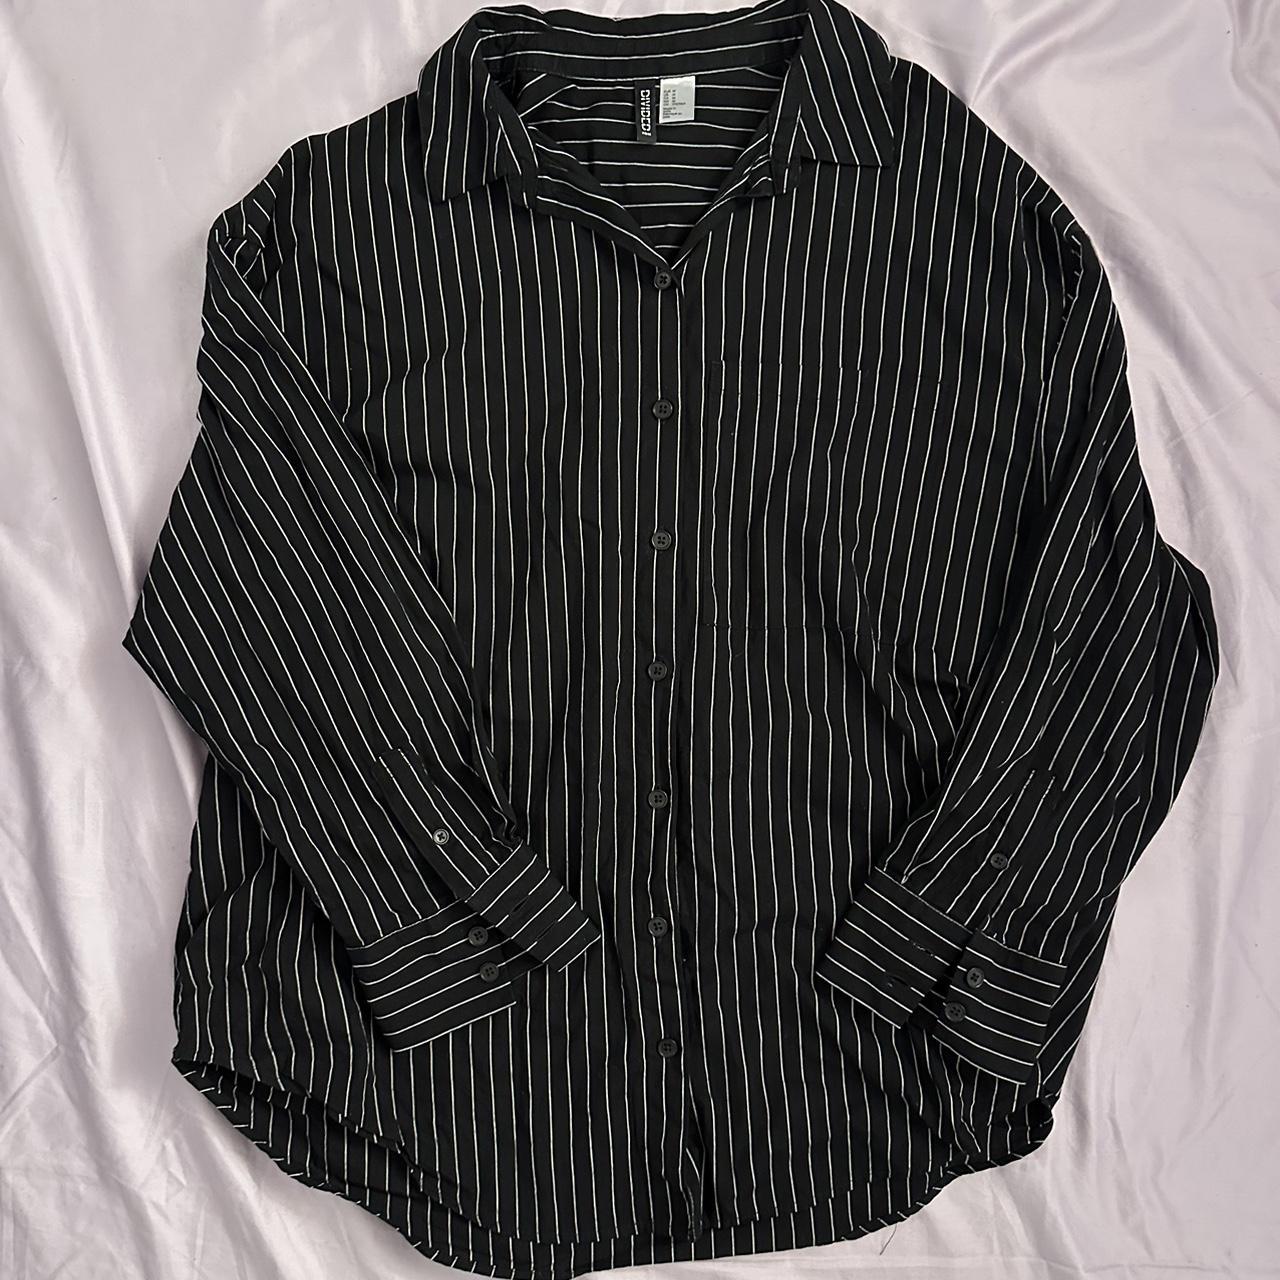 Black & White Striped Button-Up w/ a Pocket worn... - Depop